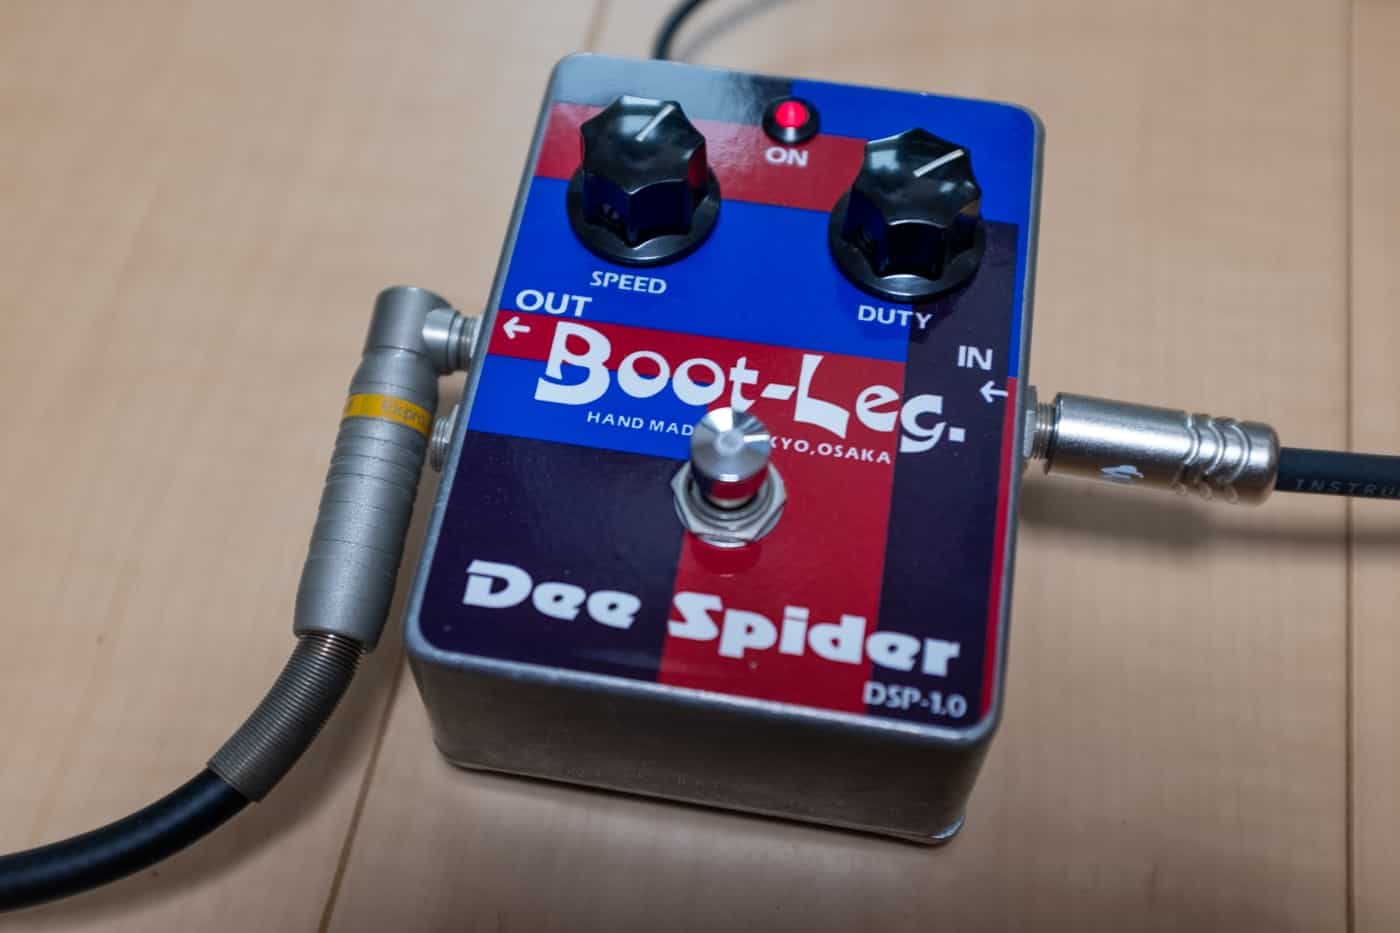 boot-leg dee spider